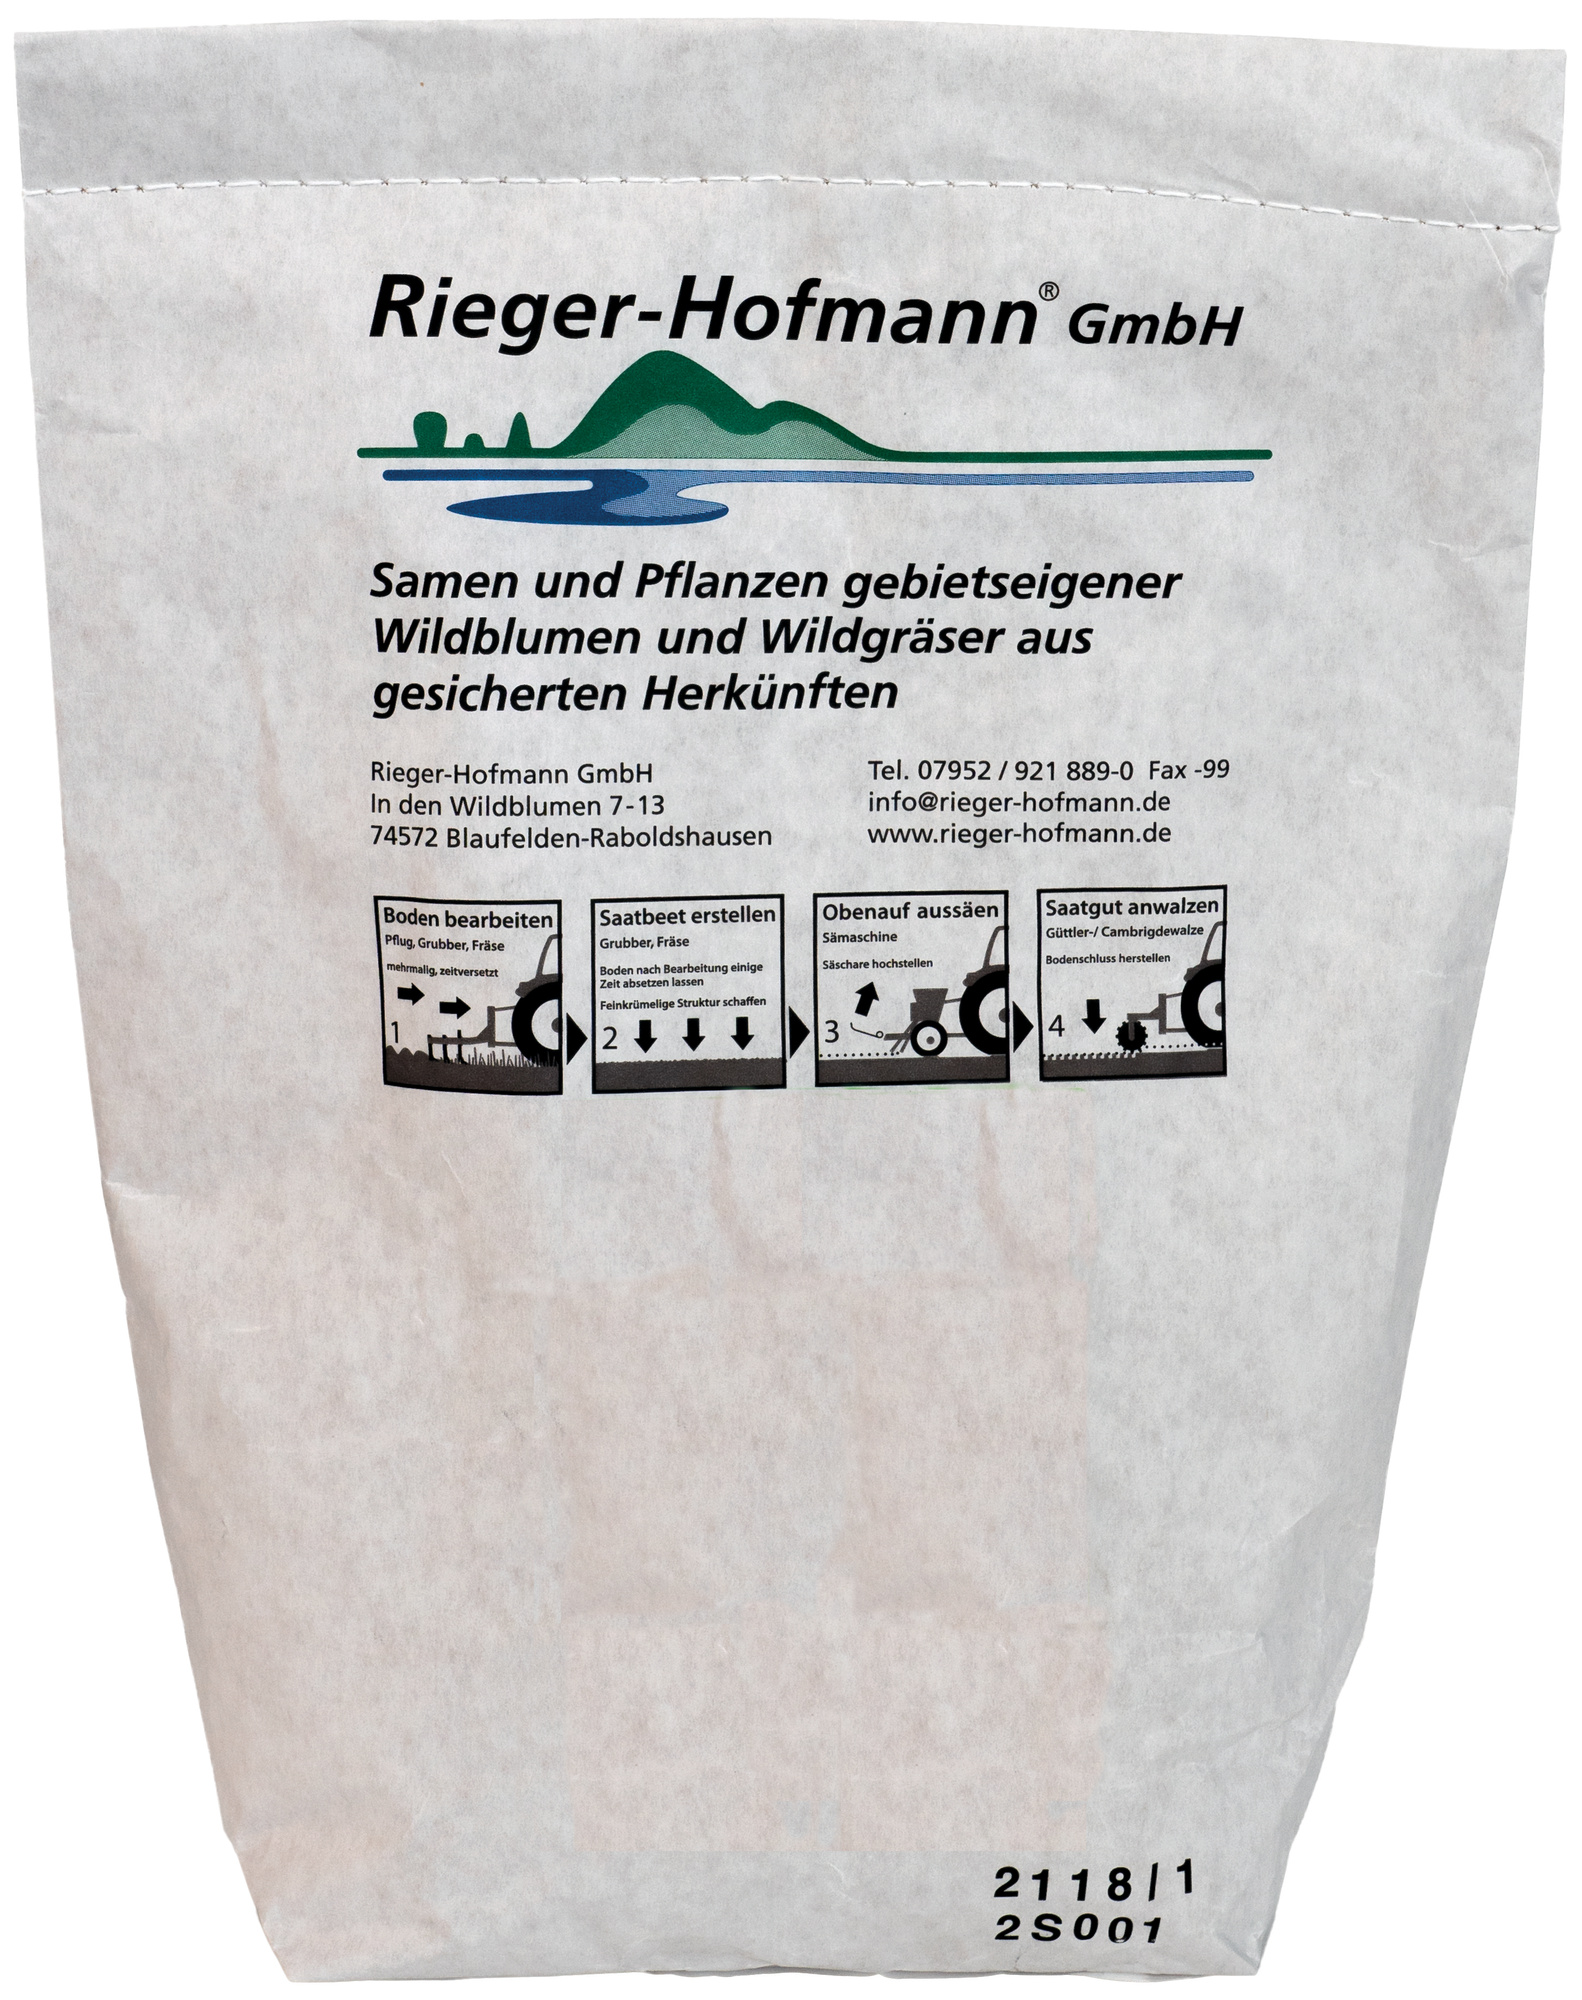 Rieger-Hofmann Schmetterlings- und Wildbienensaum